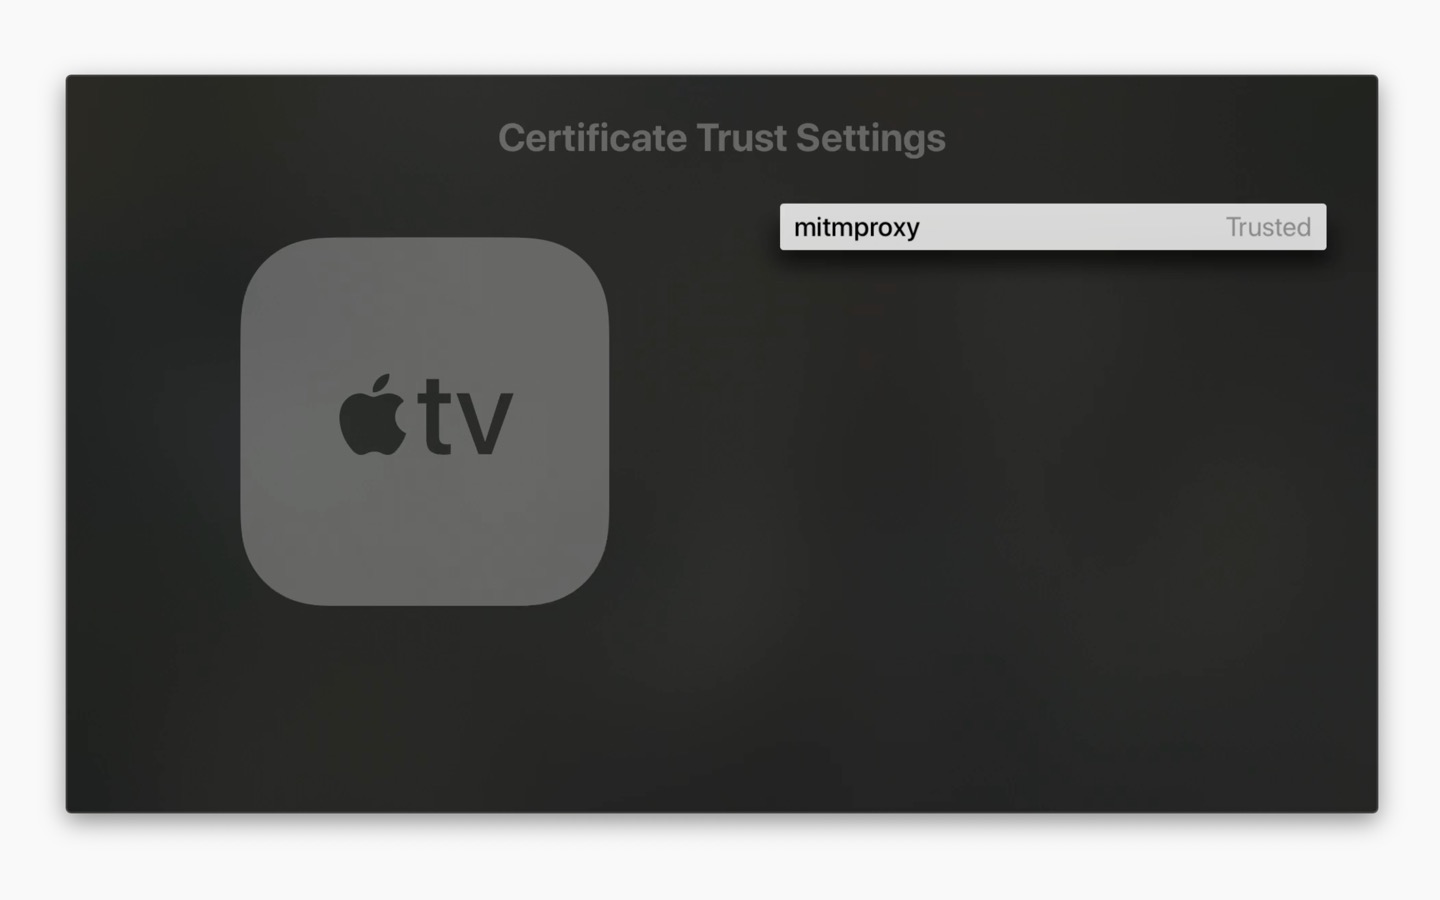 Enable certificate